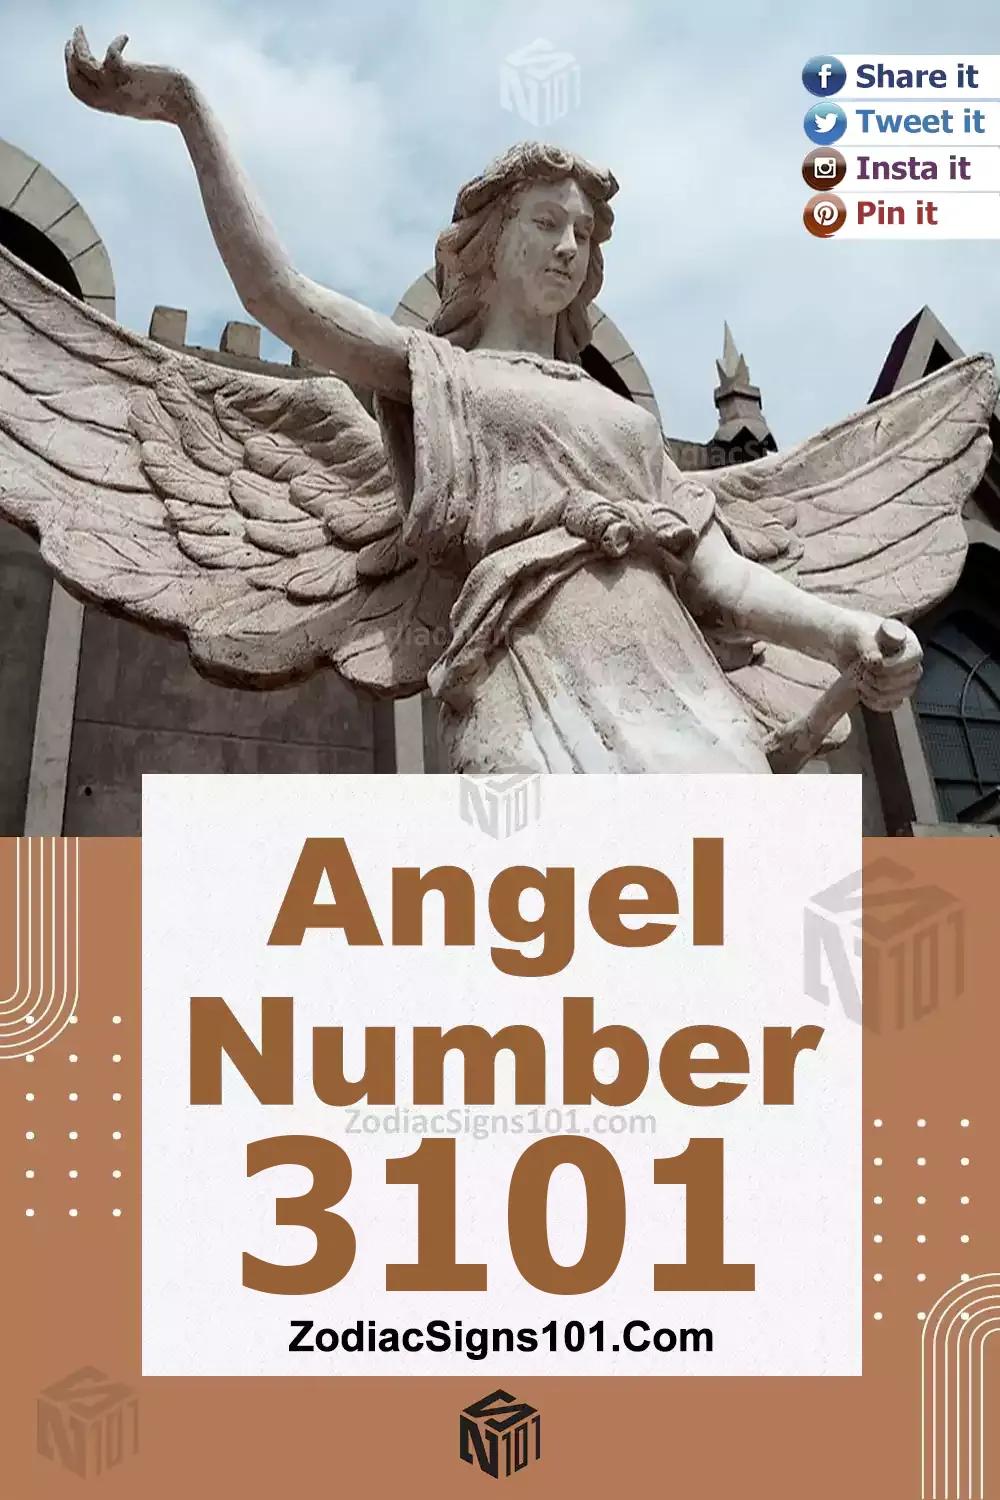 3101-Angel-Number-Meaning.jpg